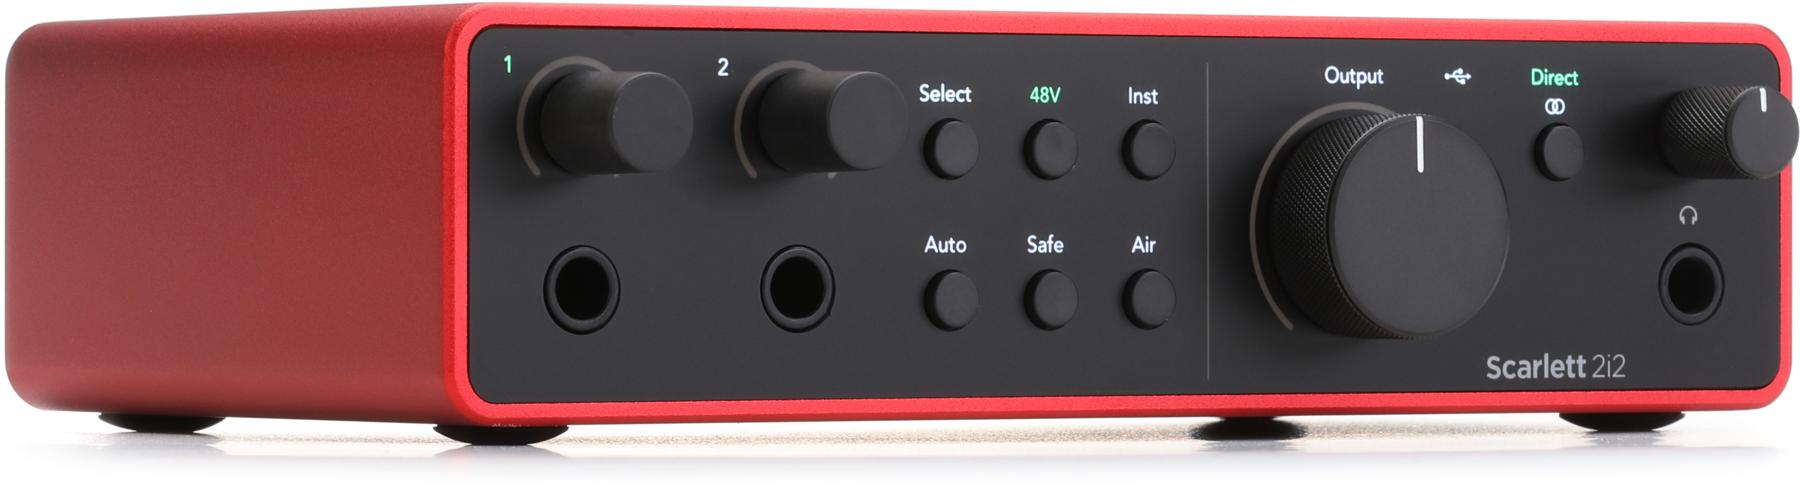 5. Focusrite Scarlett 2i2 4th Gen USB Audio Interface